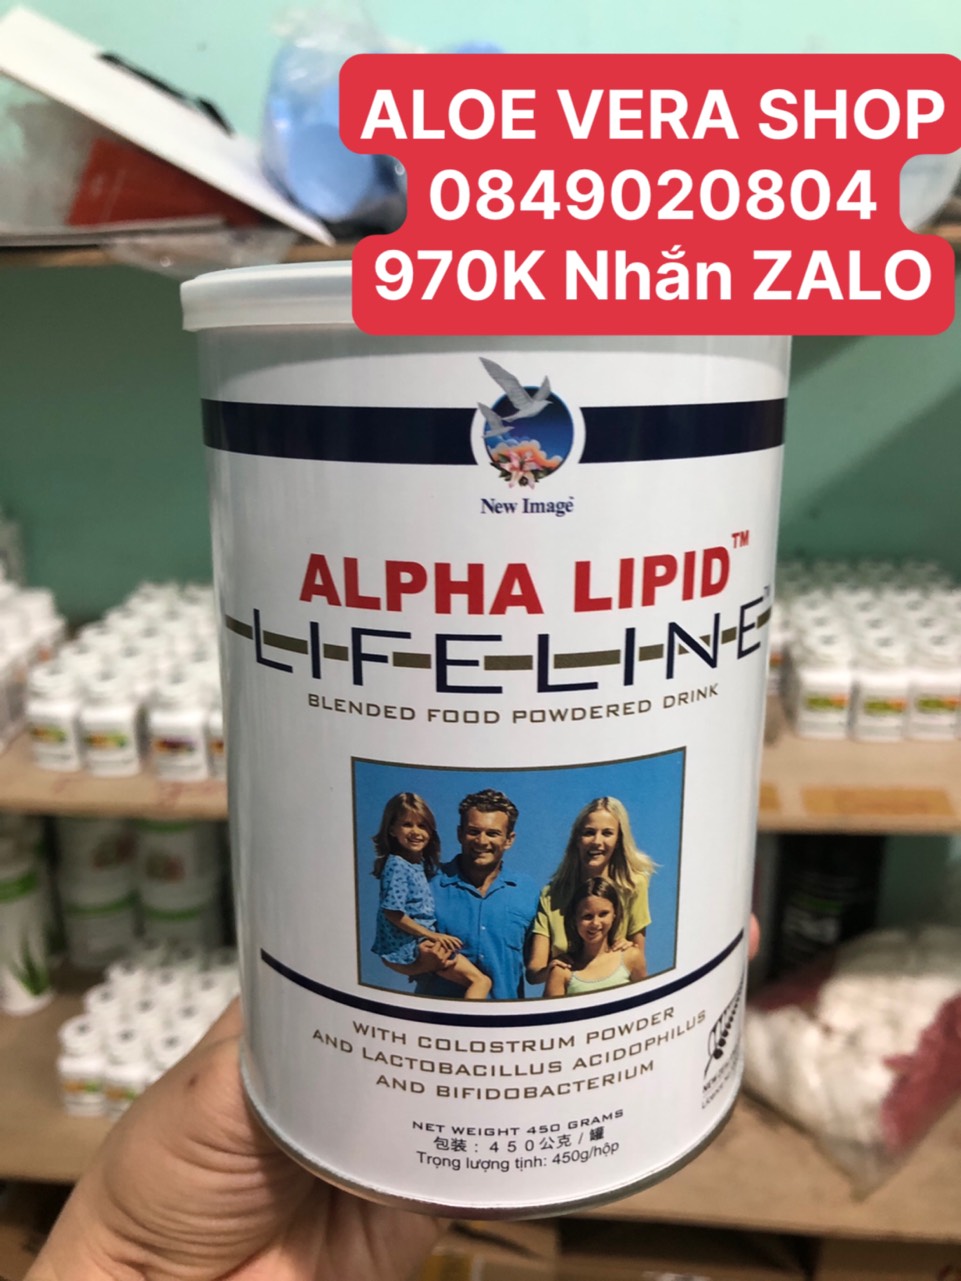 (970k) Sữa Non ALPHA LIPID LIFELINE của New Zealand